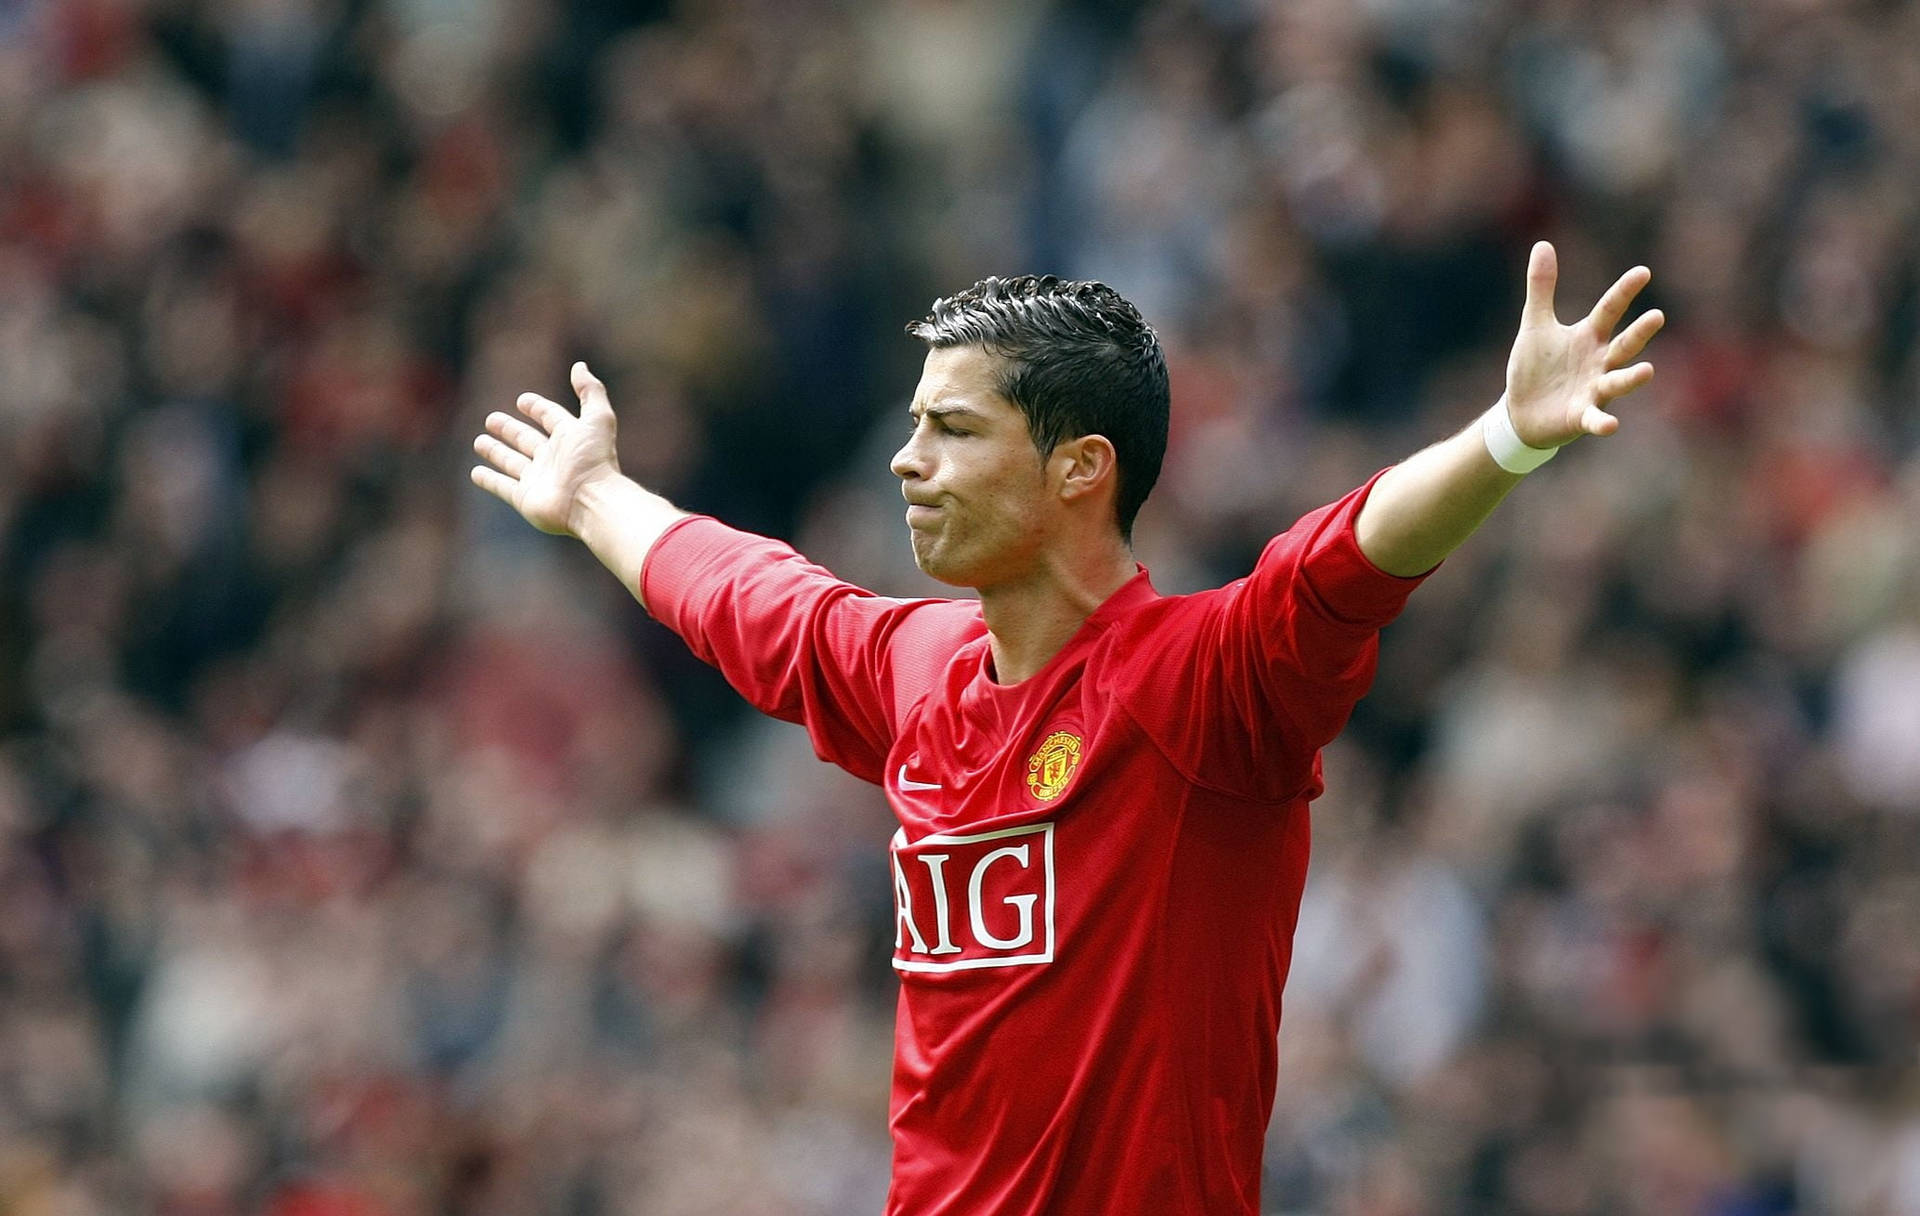 Cristiano Ronaldo Manchester United Hands Up